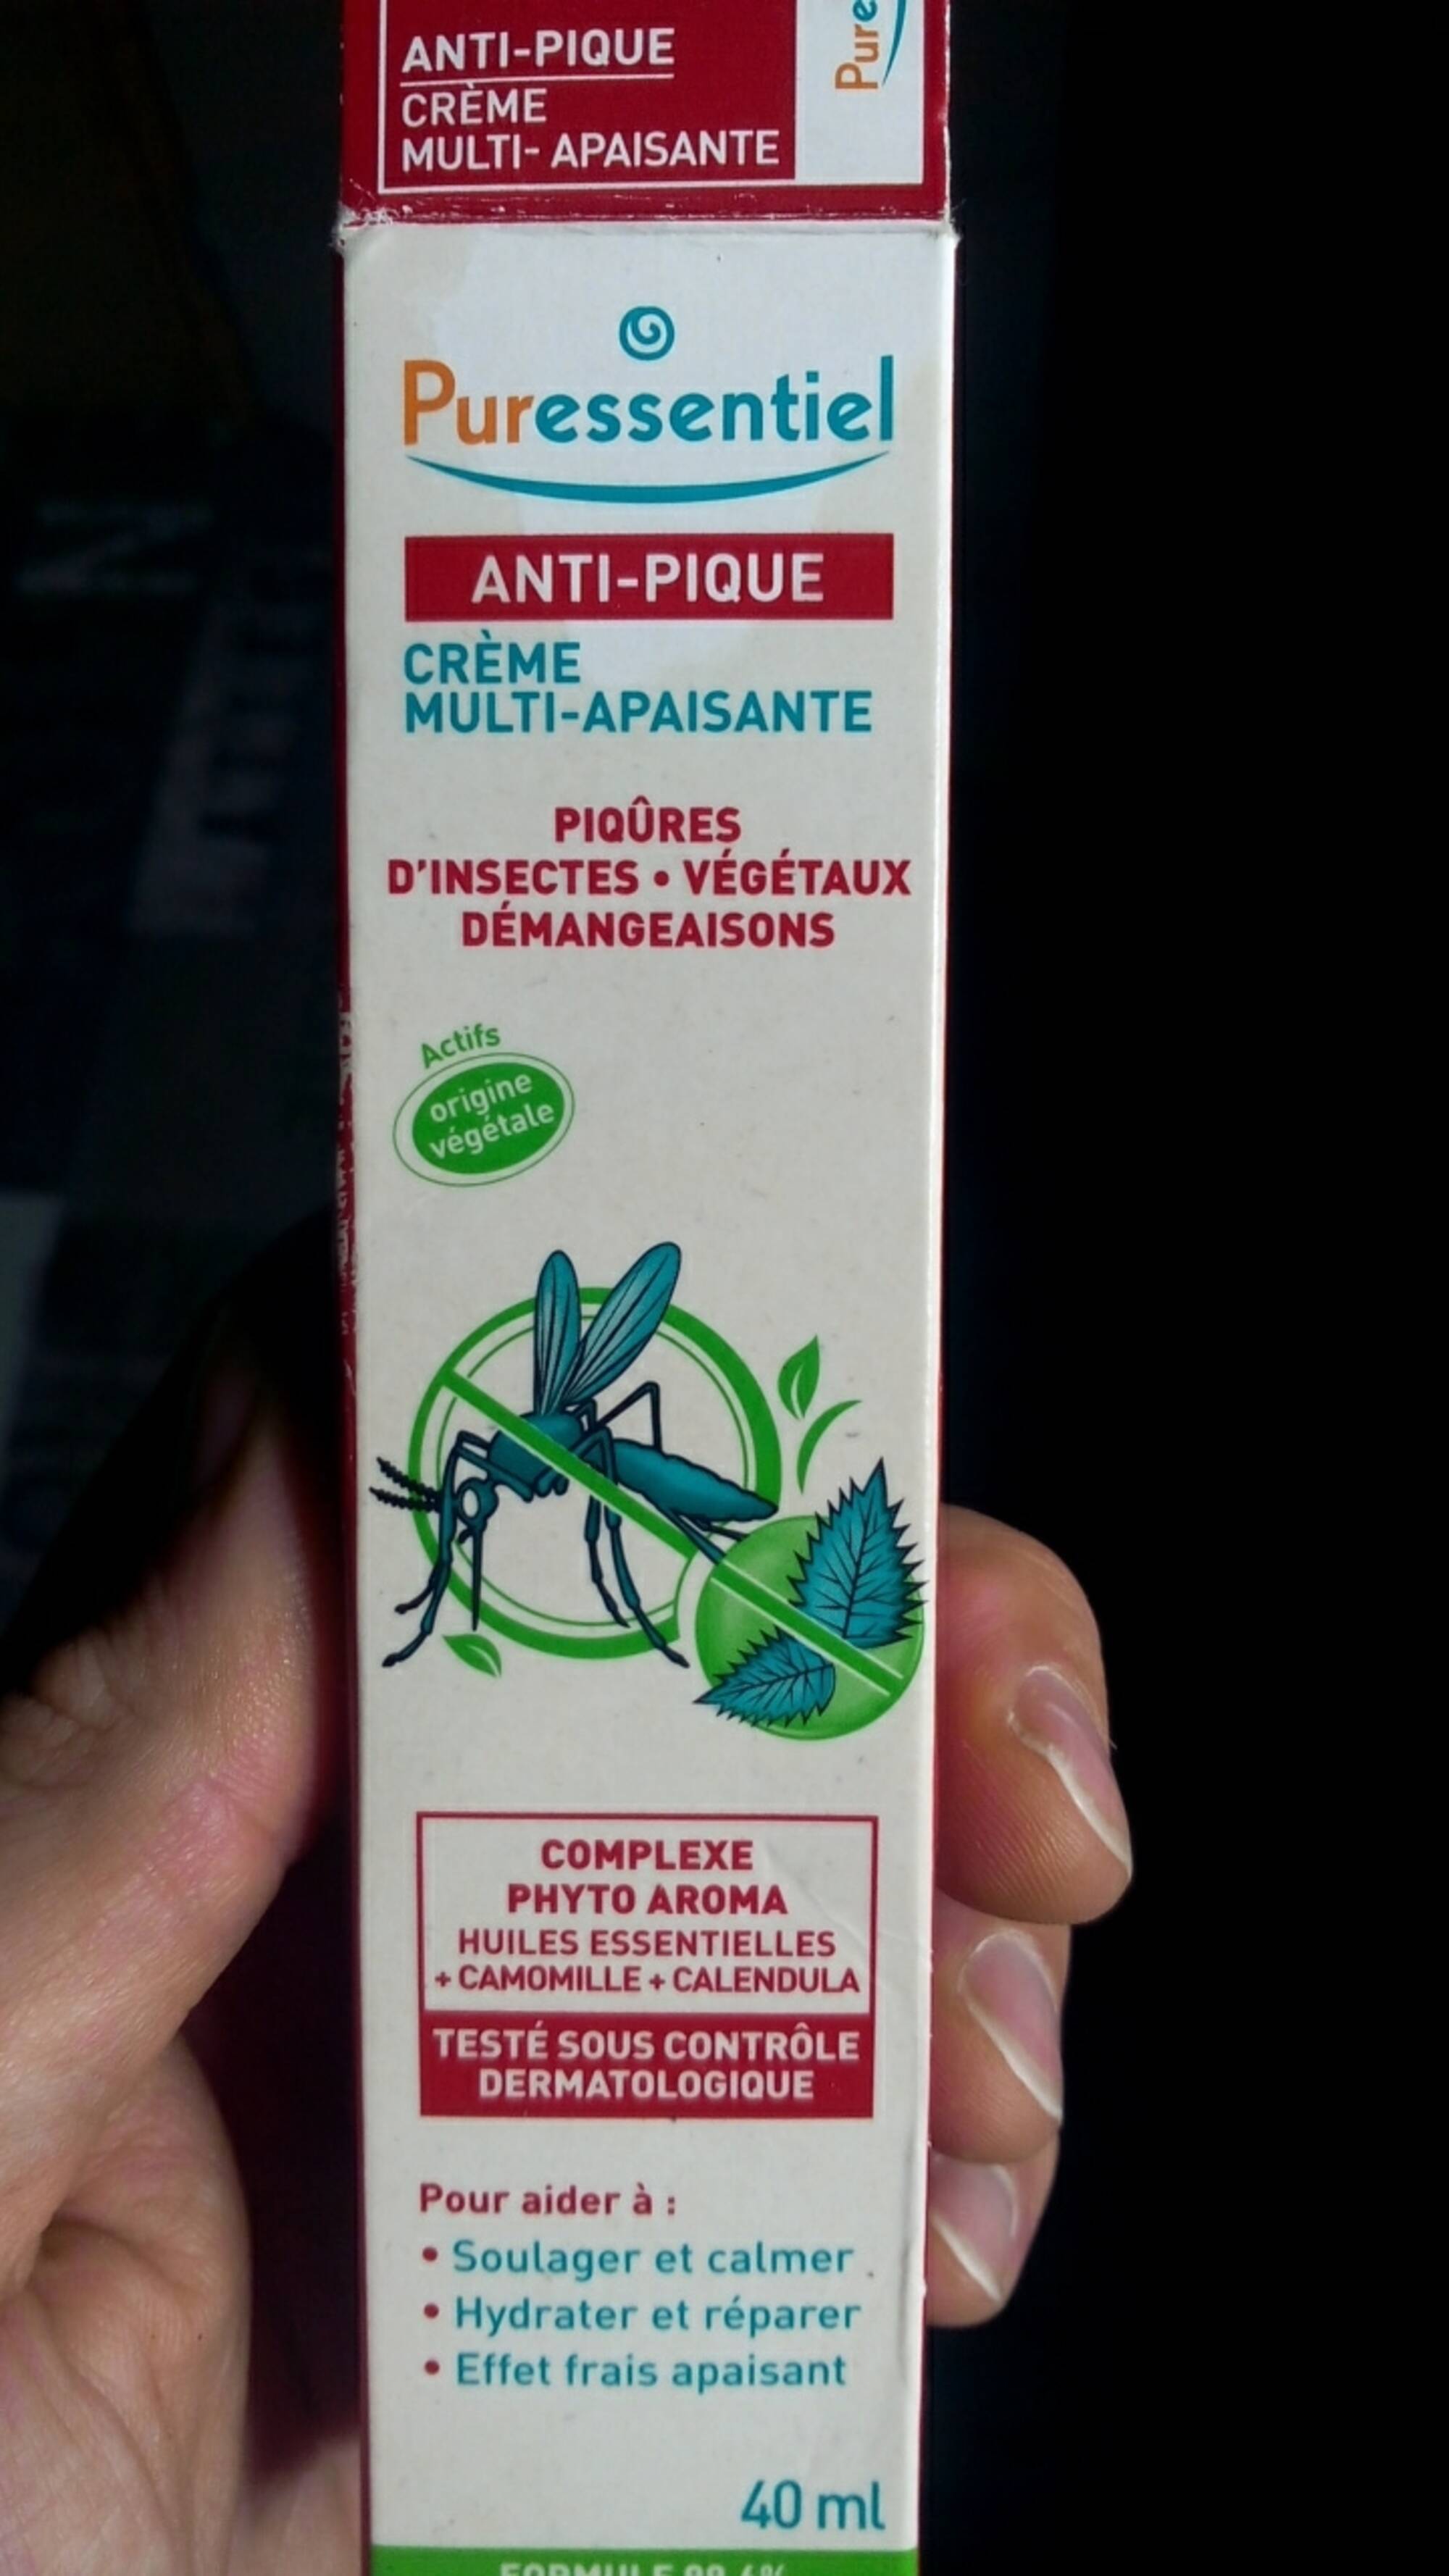 Puressentiel - Anti-Pique Crème Apaisante tube - 40 ml